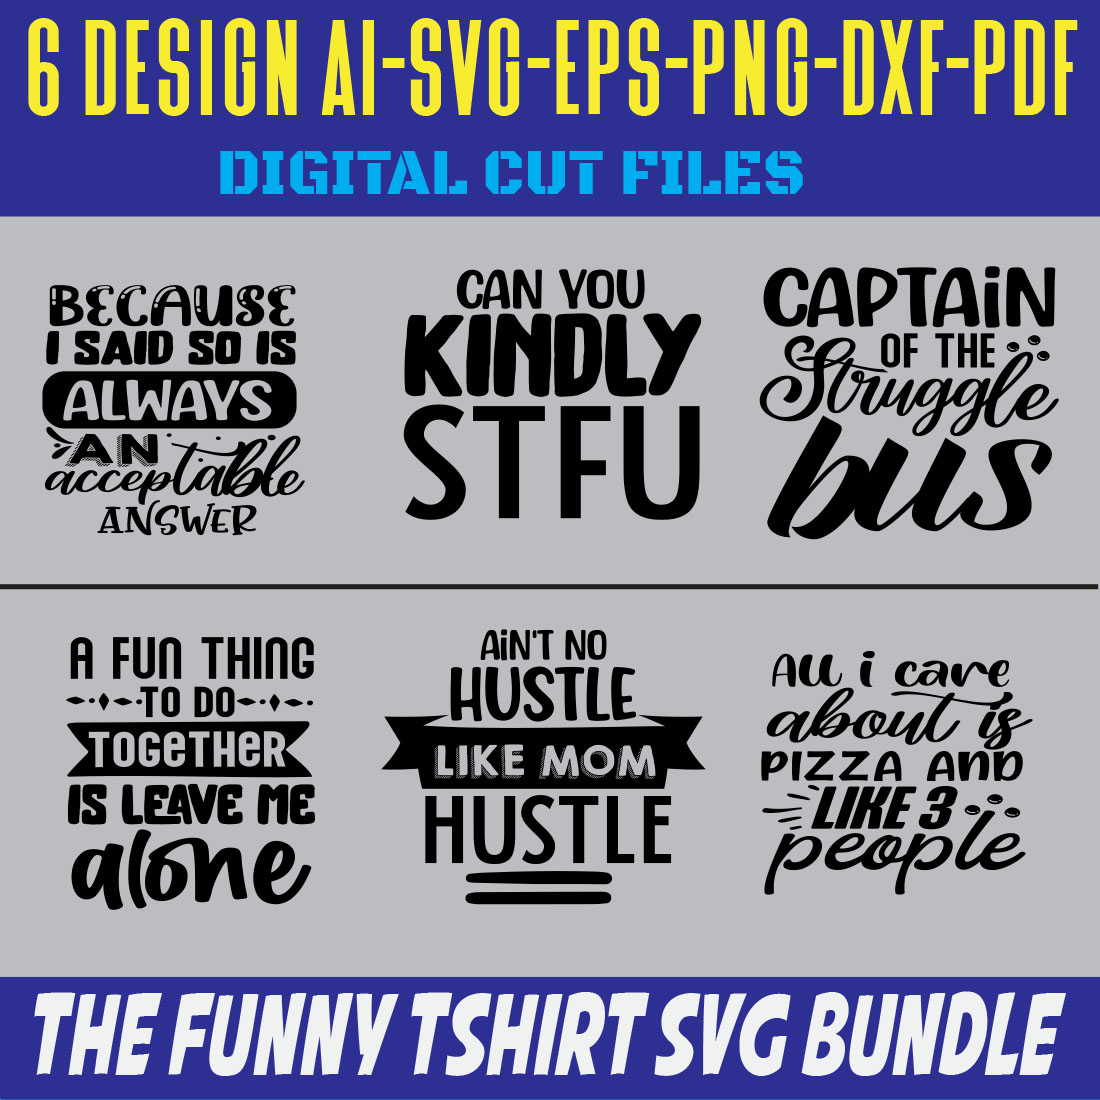 The Funny Tshirt SVG Bundle cover image.